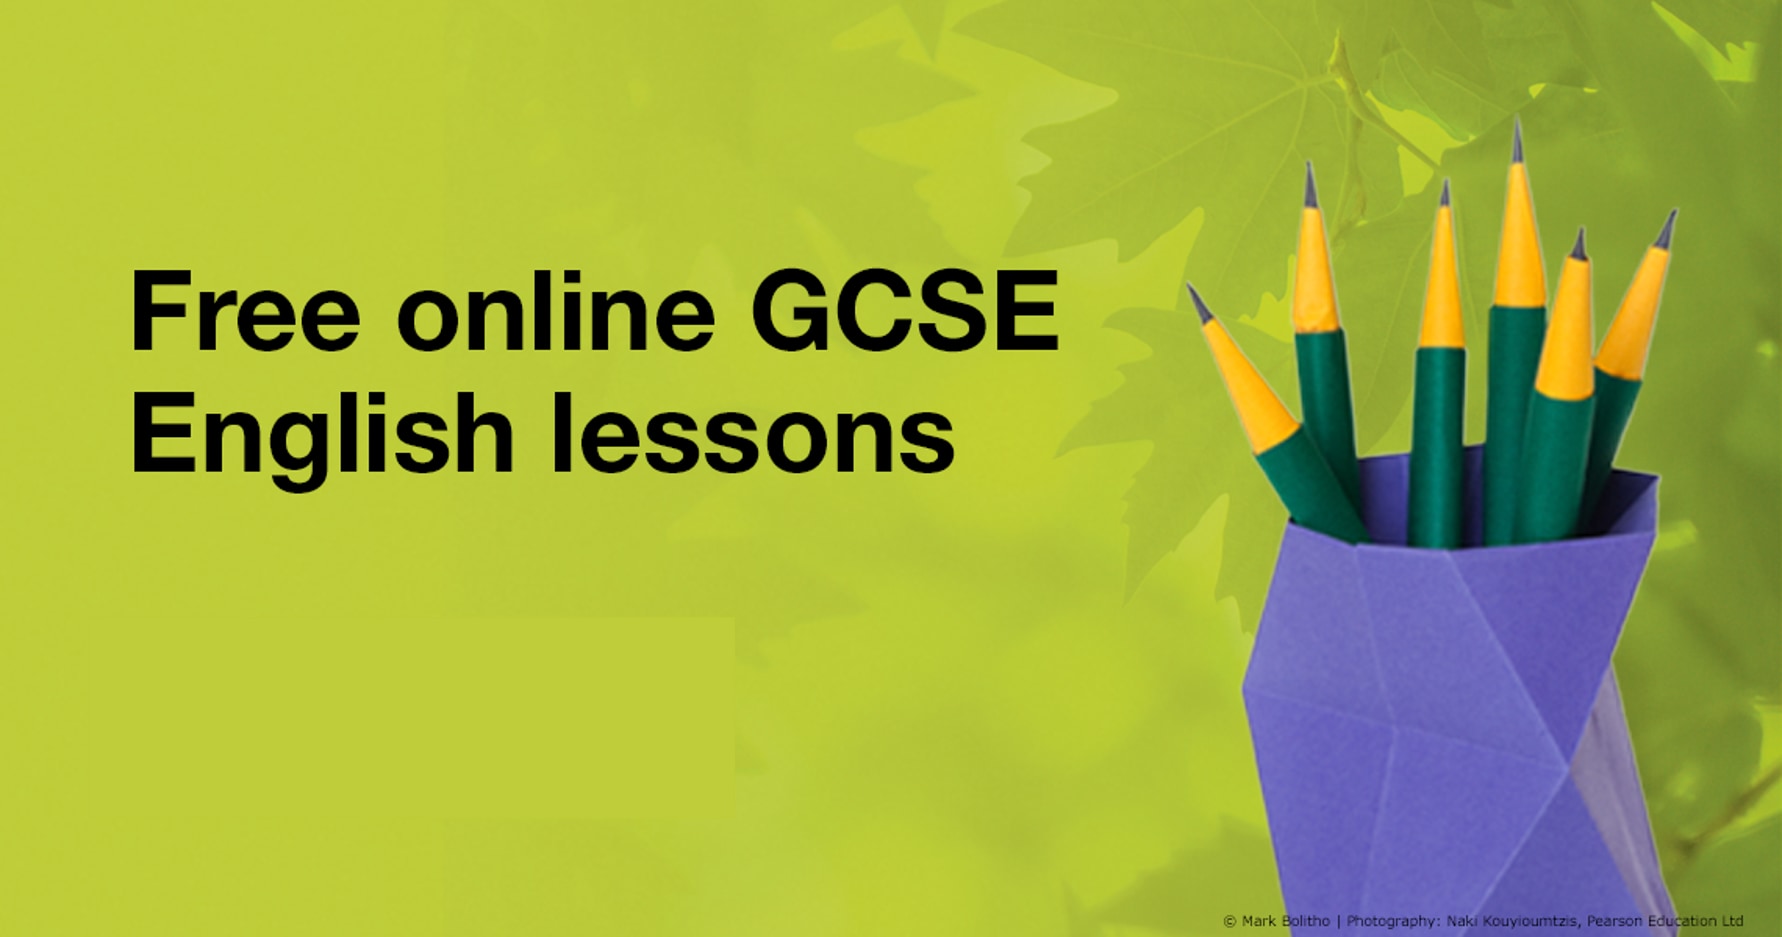 Free online GCSE English lessons